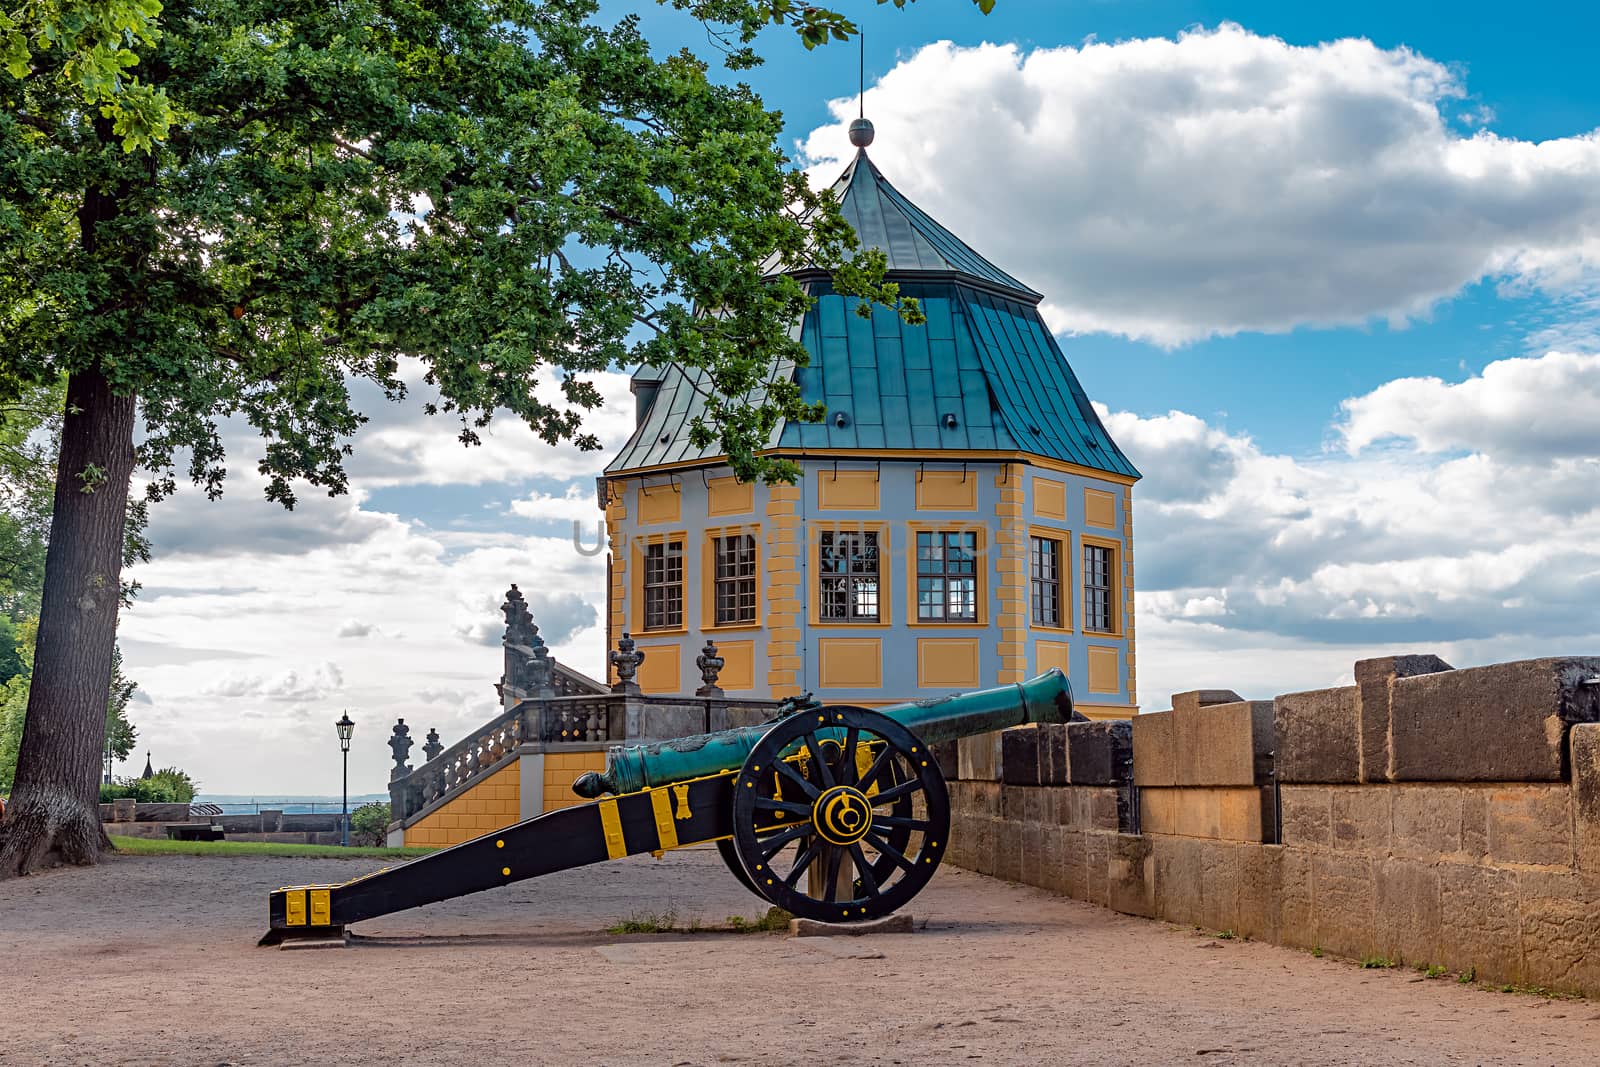 Cannon in front of Friedrichsburg on Koenigstein Fortress, Germany